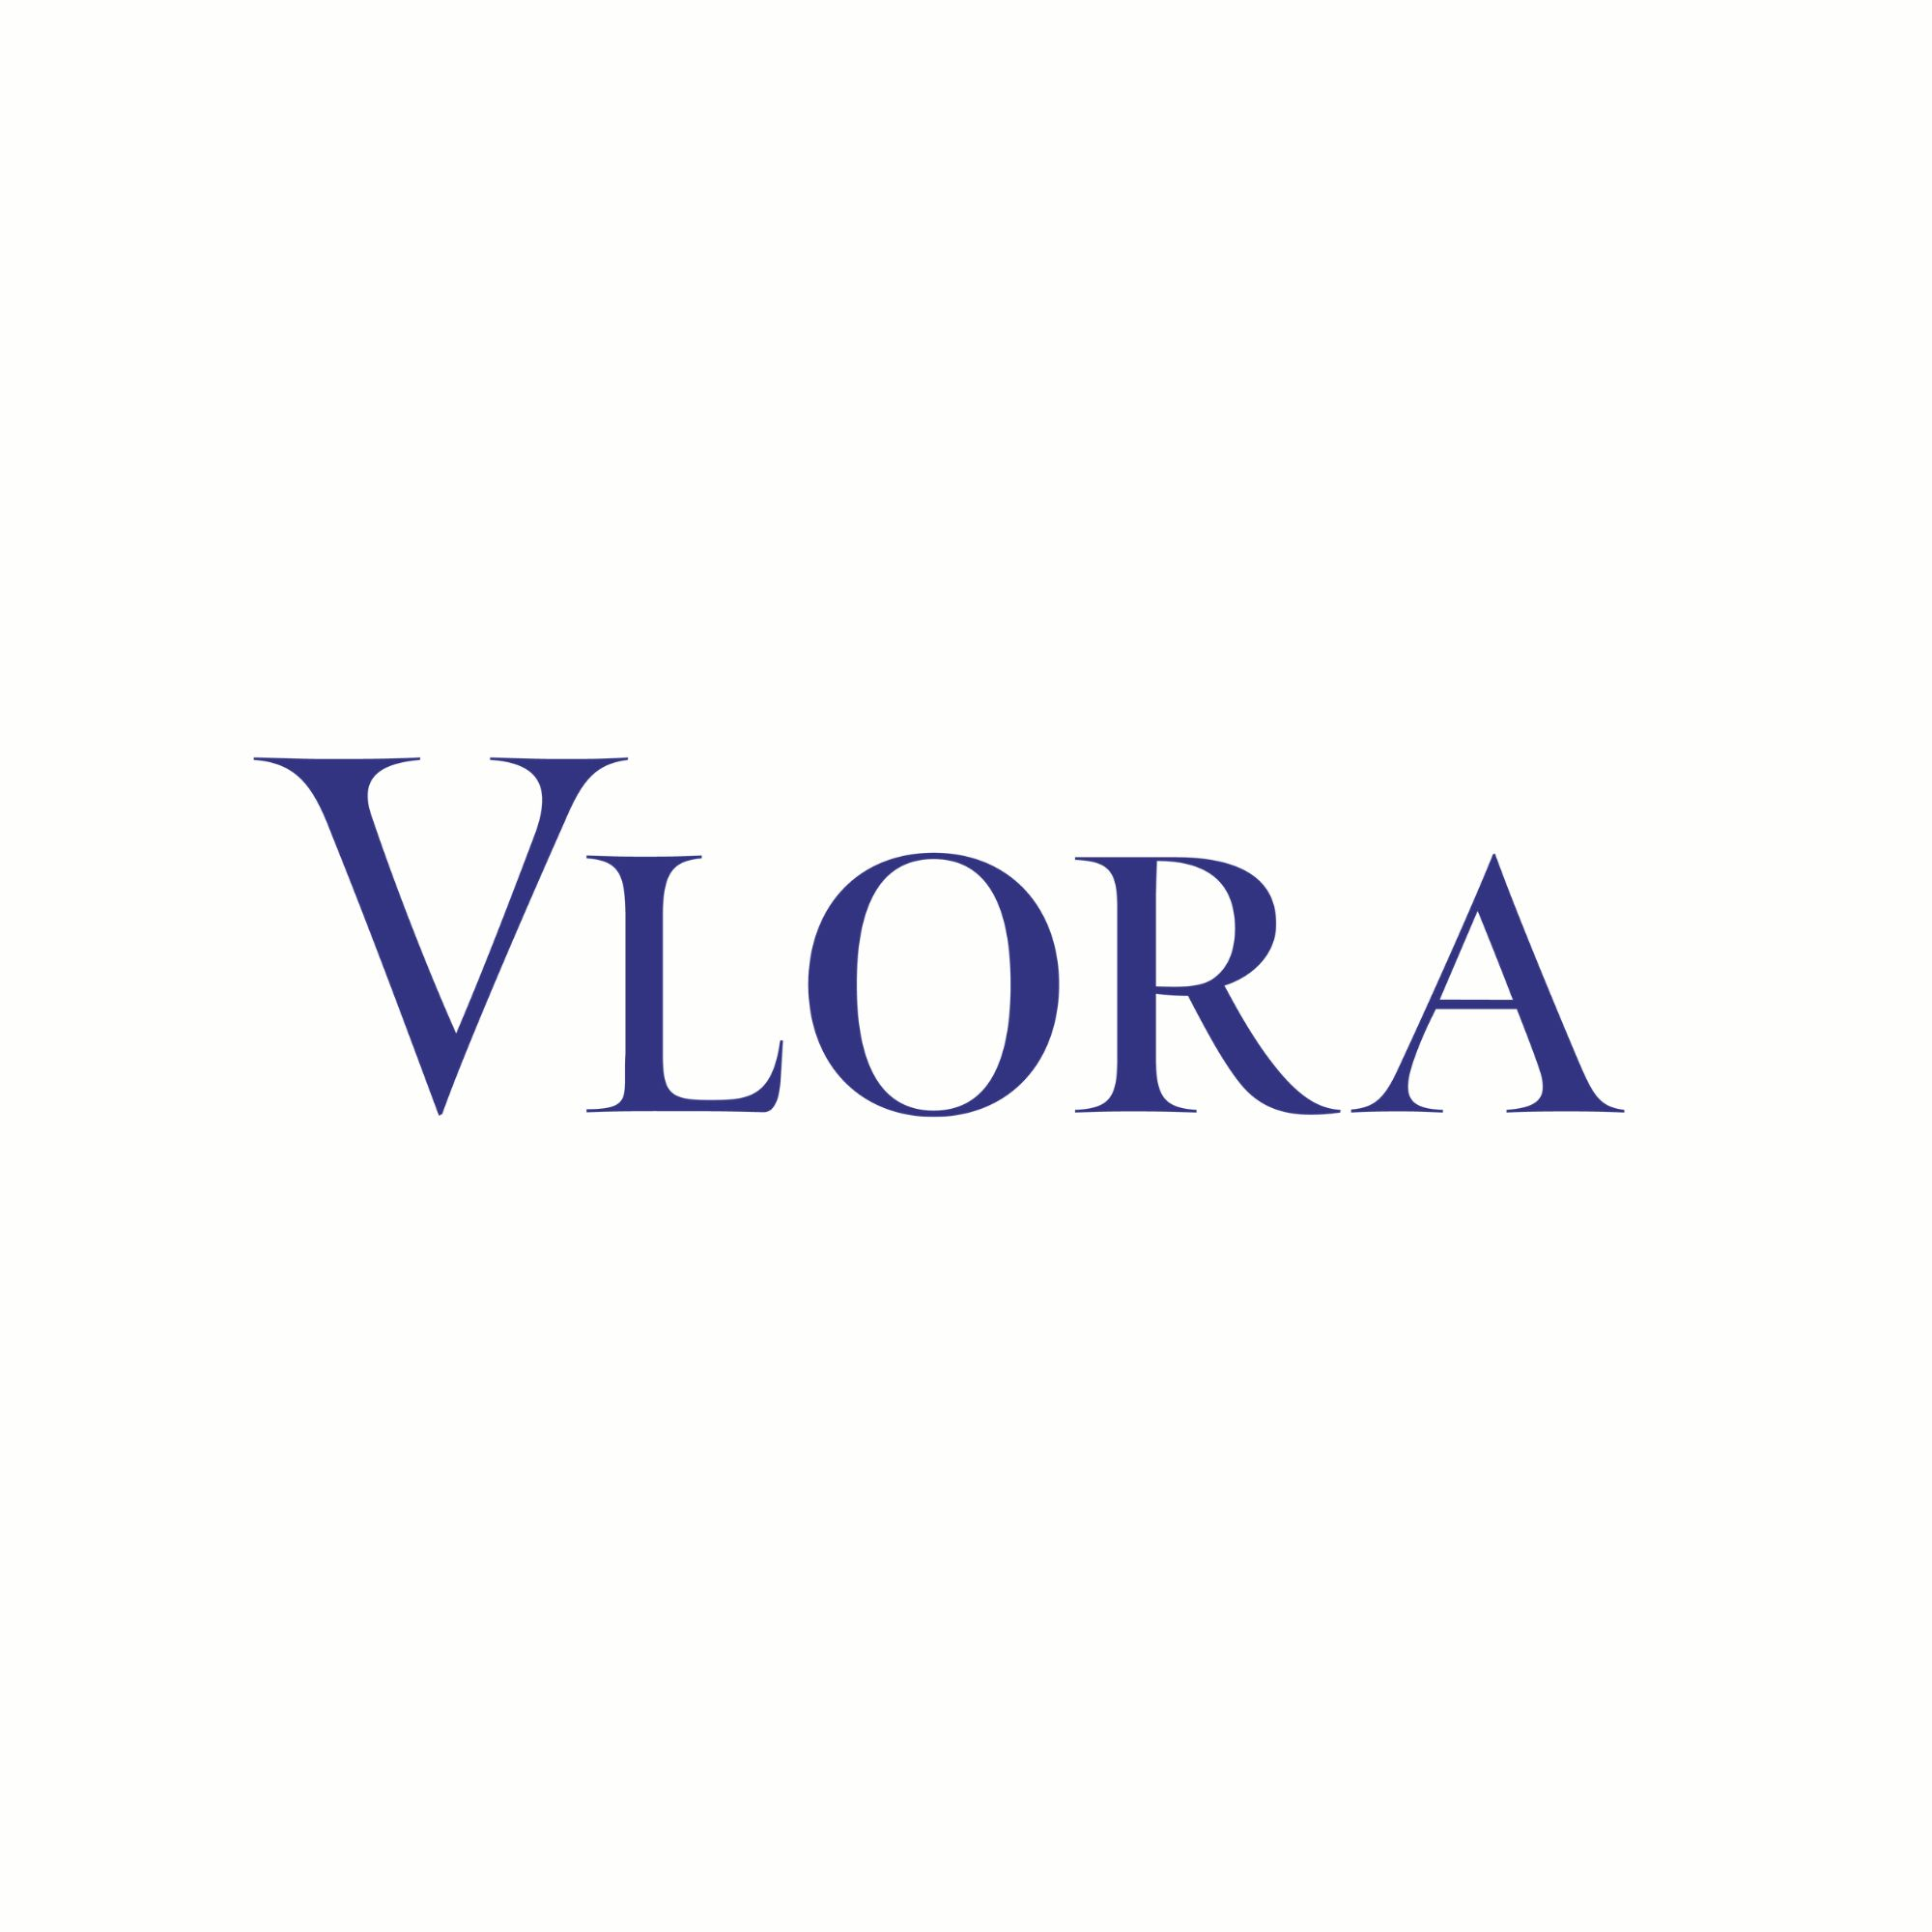 Vlora logo and rings